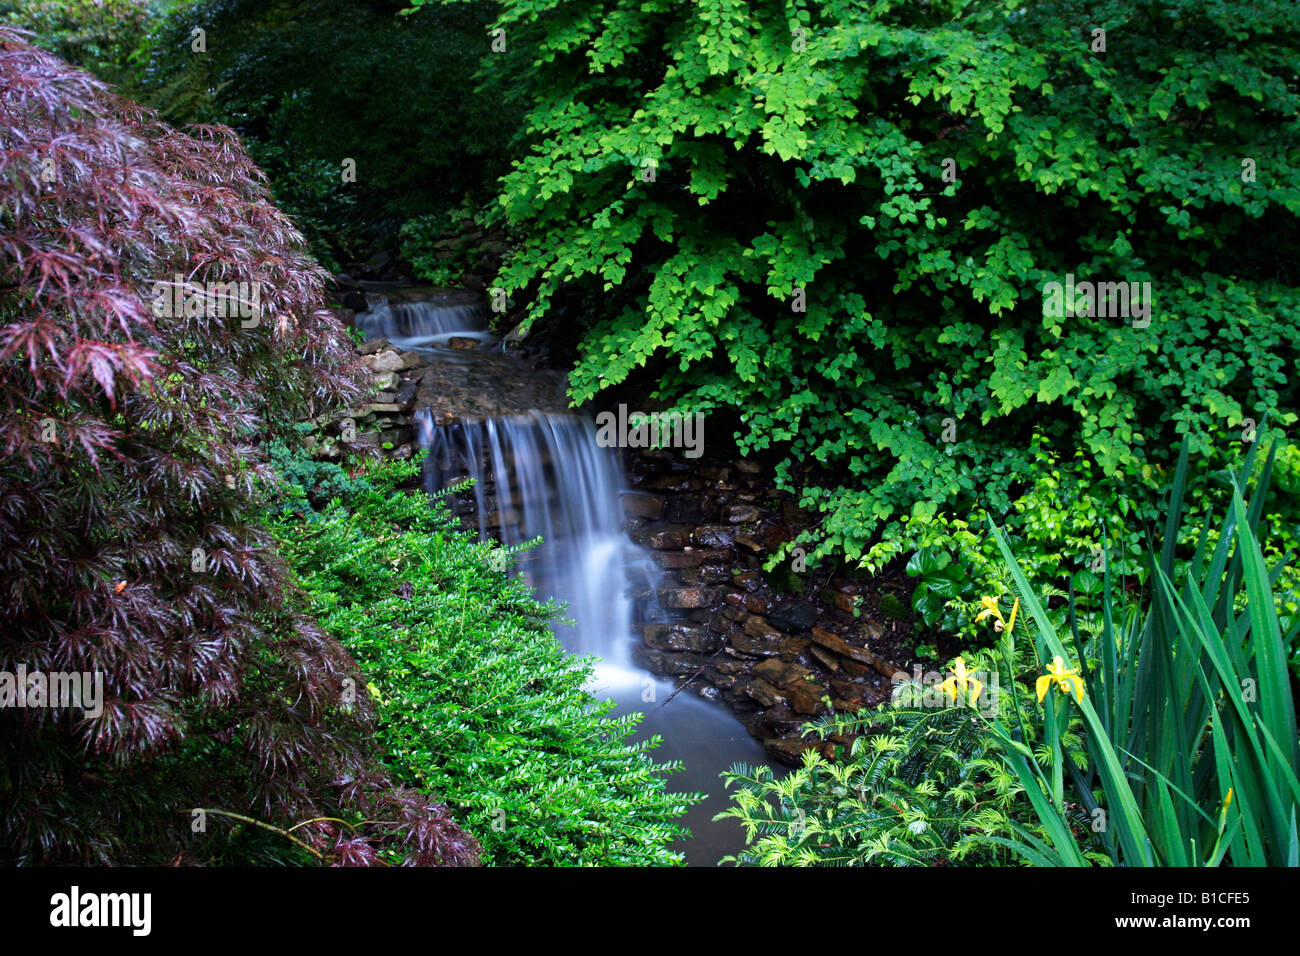 Garden setting in the South Carolina Botanical Garden with Yellow Iris, water fall and shrubs Stock Photo